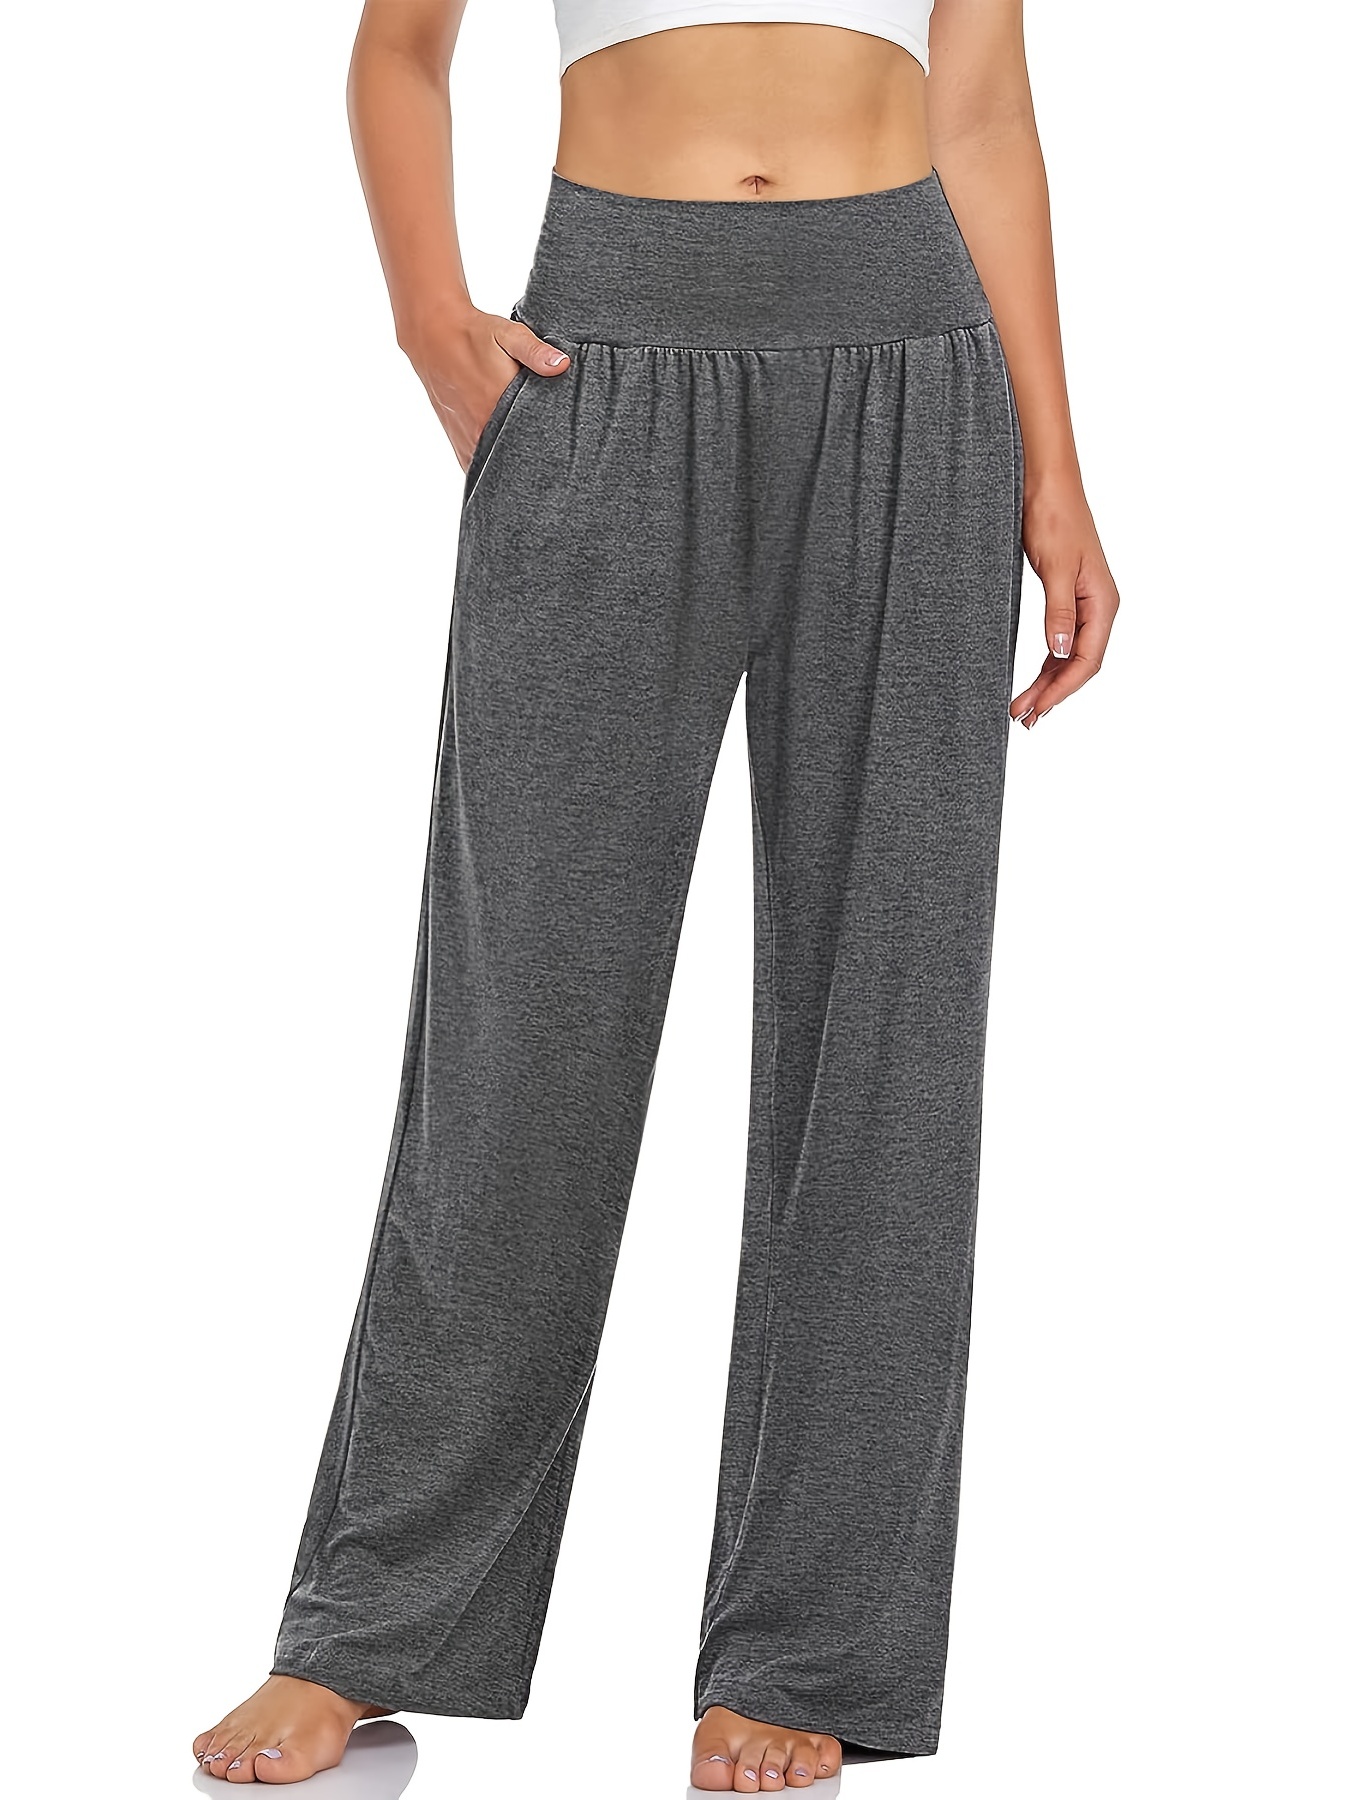 Pxiakgy yoga pants Women's Tight Elastic Quick Drying Yoga Pants Reflective  Seven Point Yoga Pants Grey + XL 